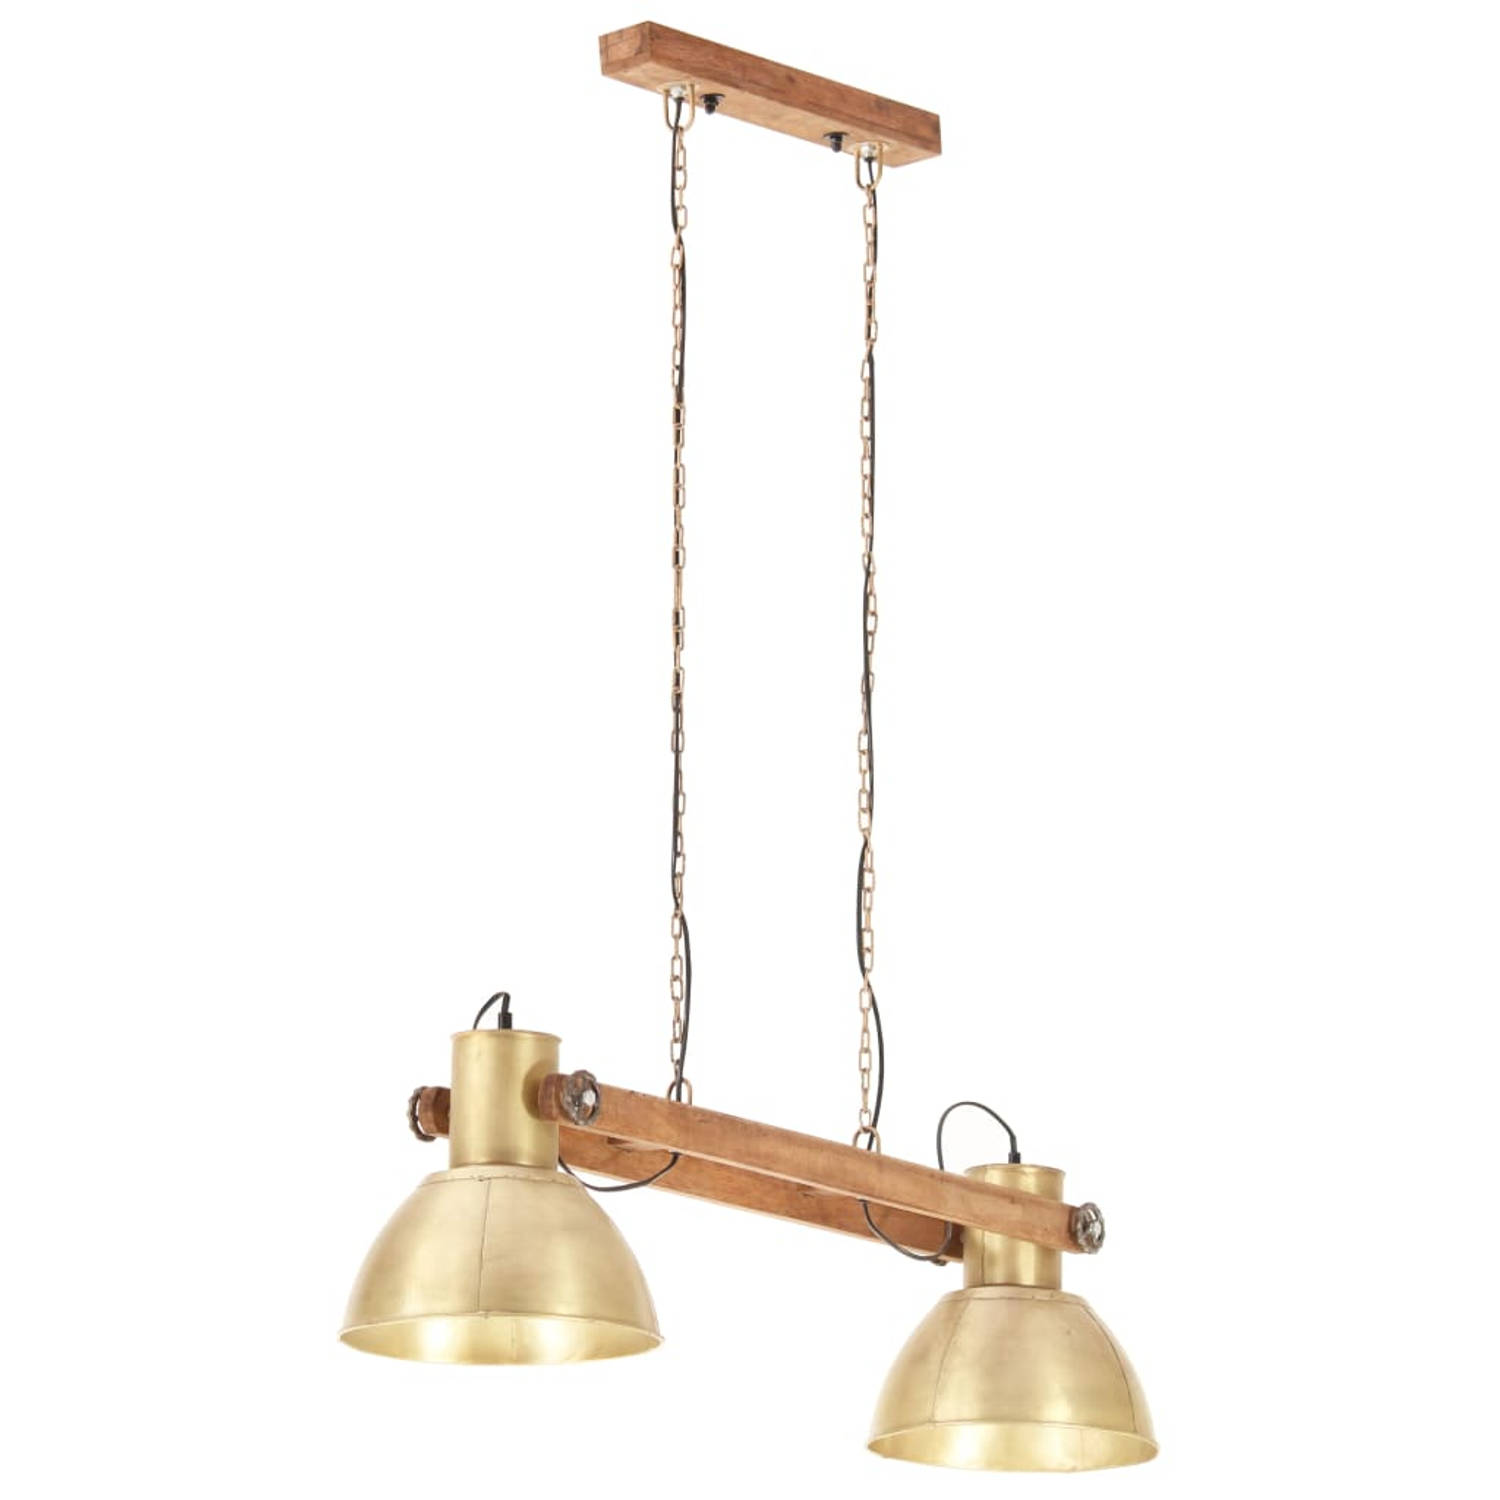 The Living Store Hanglamp Antiek Messing 109 cm 29 x 28 cm Industrieel